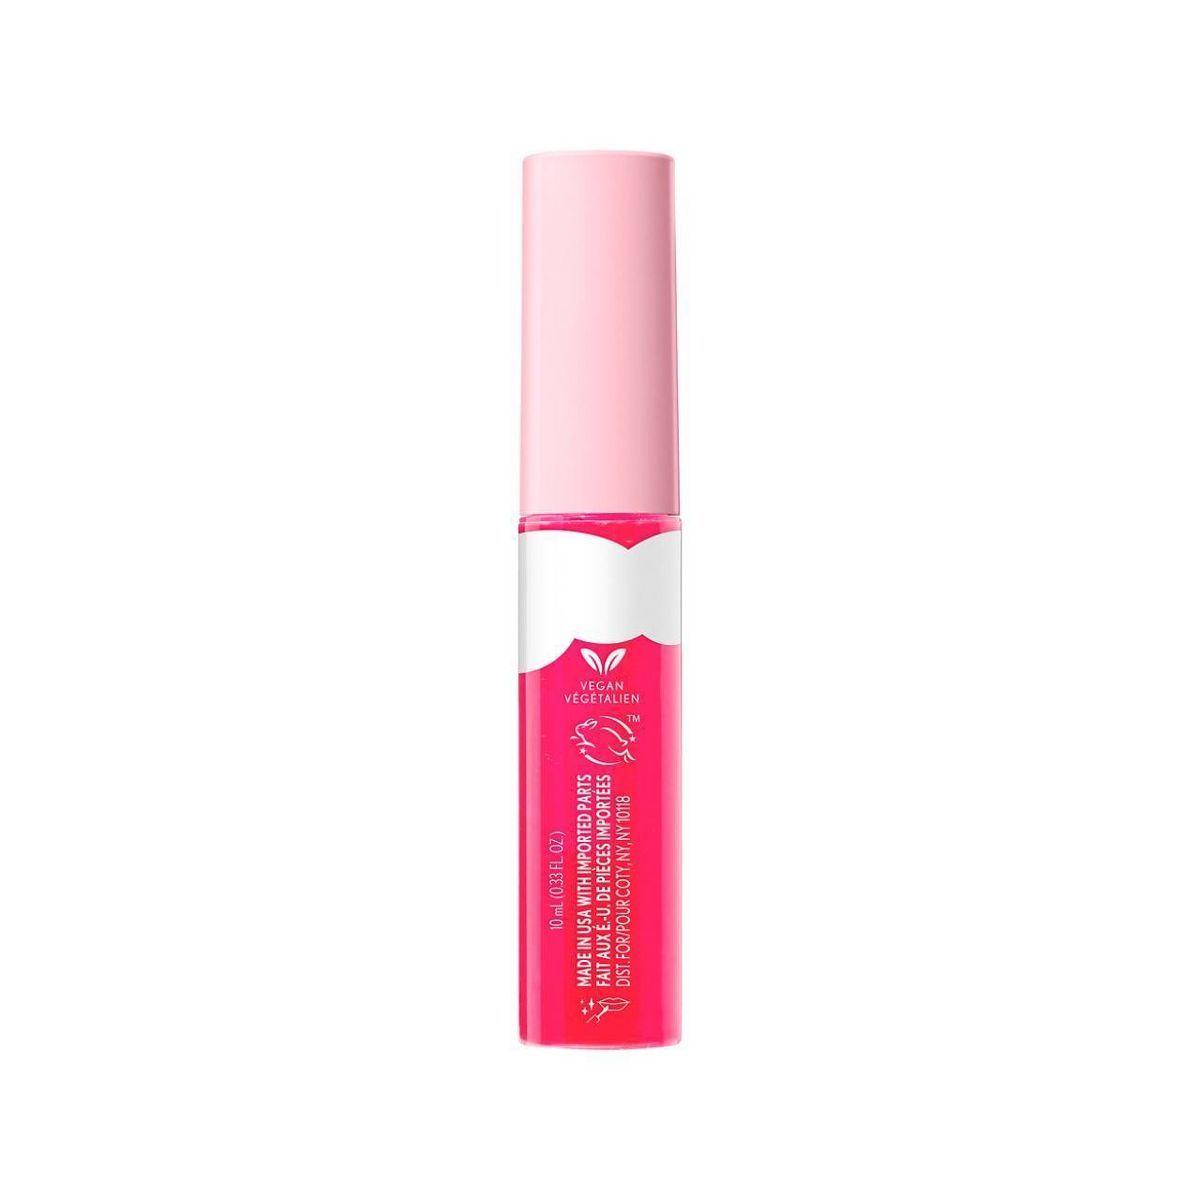 COVERGIRL Clean Fresh Yummy Lip Gloss - 0.33 fl oz | Target